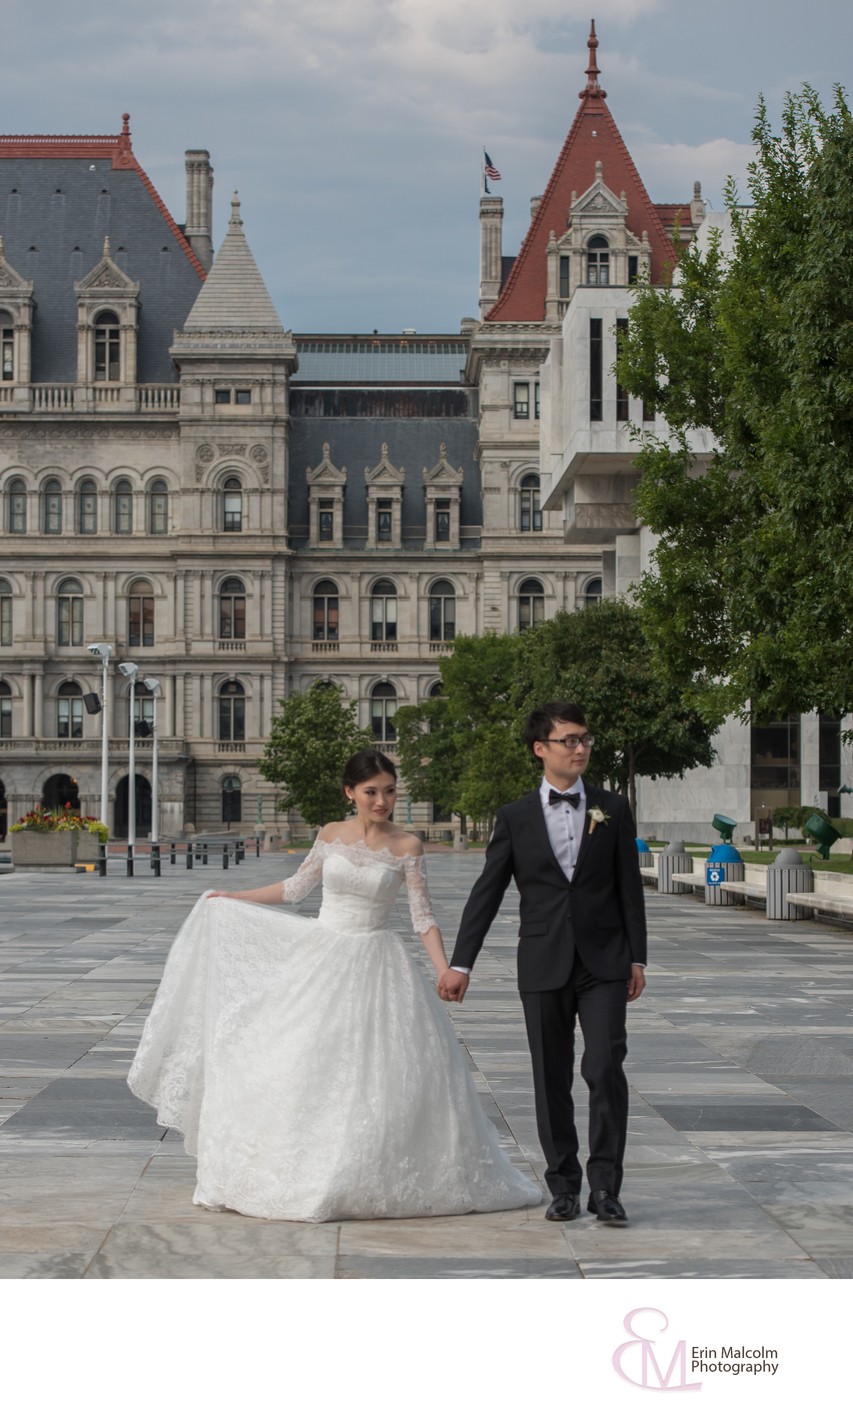 Empire State Plaza Concourse Wedding Photographer